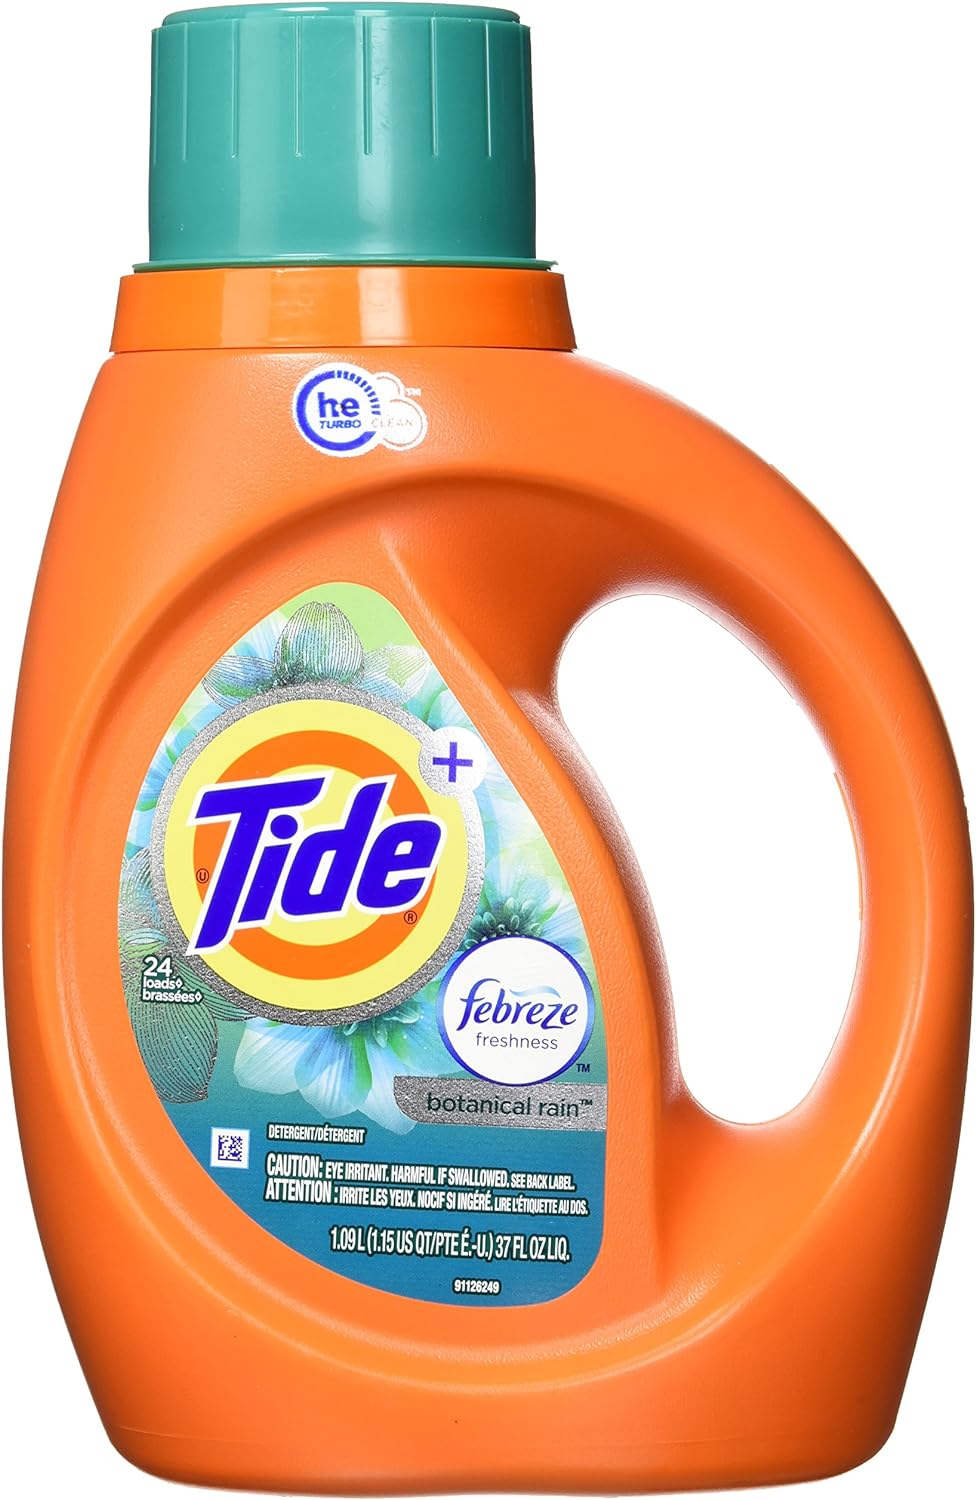 Tide Liquid Laundry Detergent High Efficiency Febreze Botanical Rain 24 Ld (1.09L)